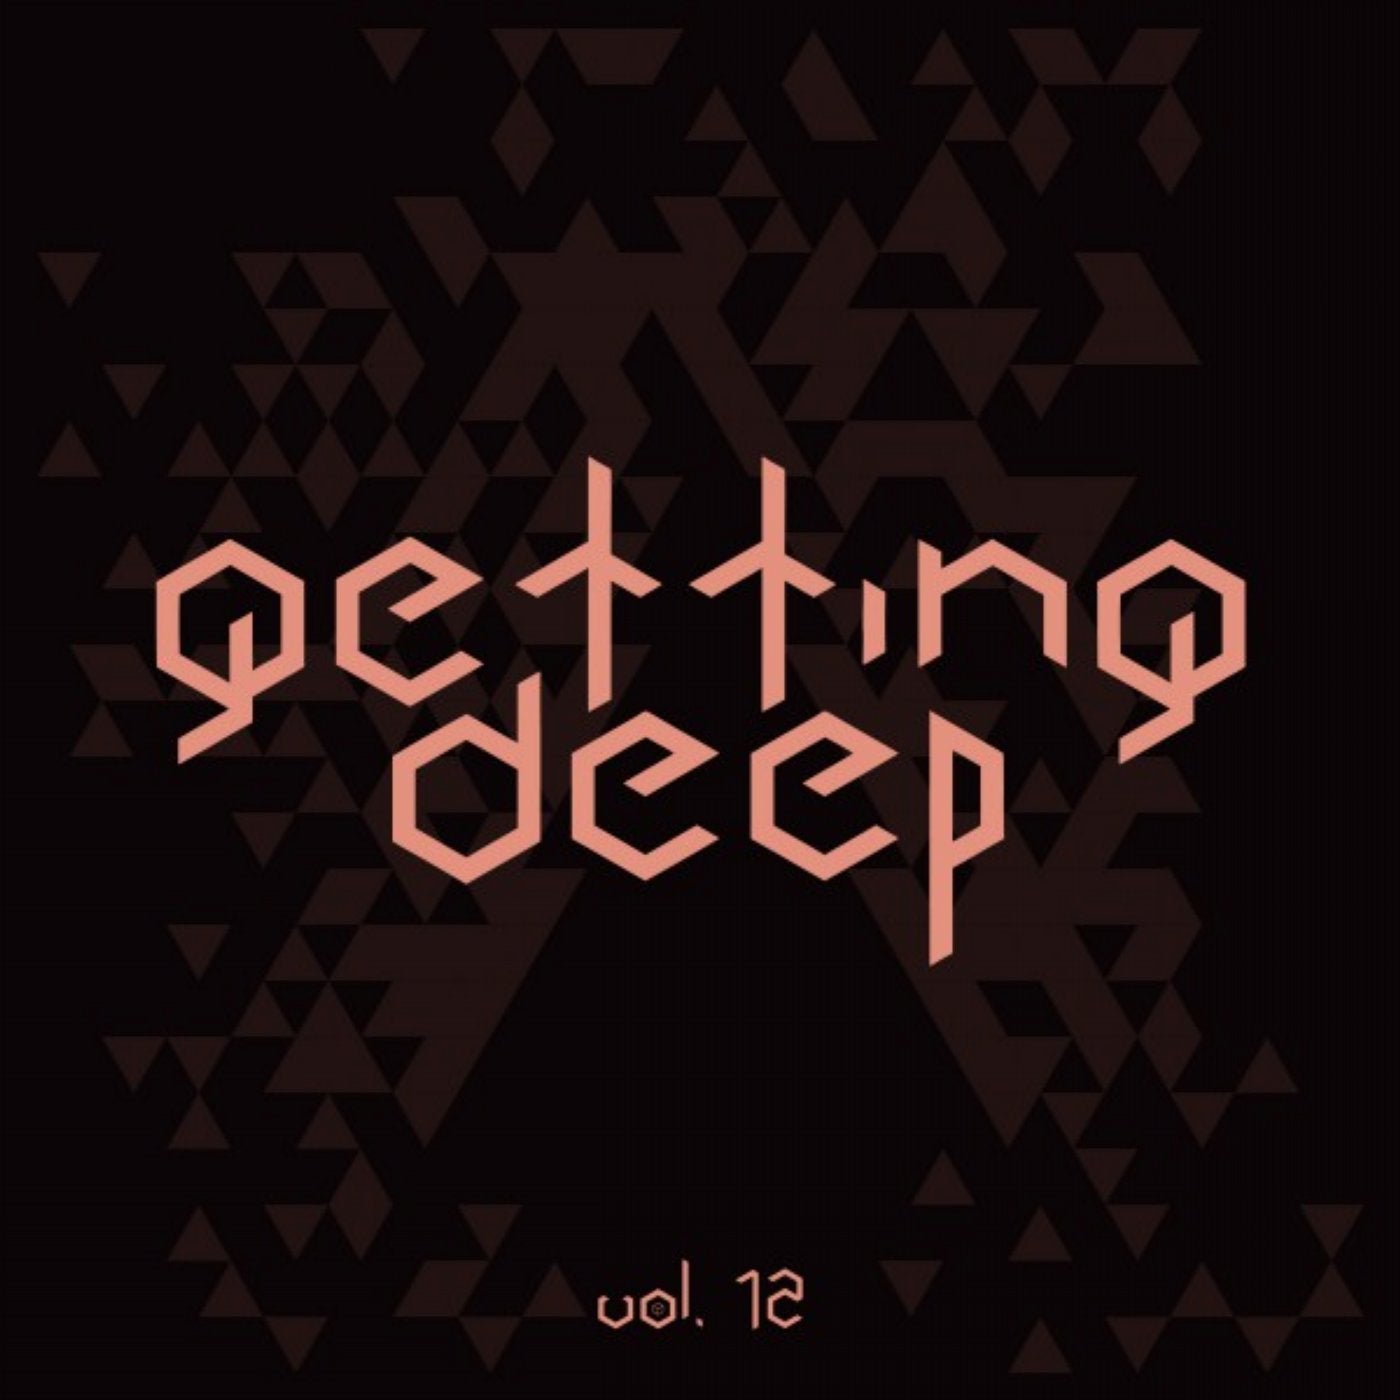 Getting Deep, Vol. 12